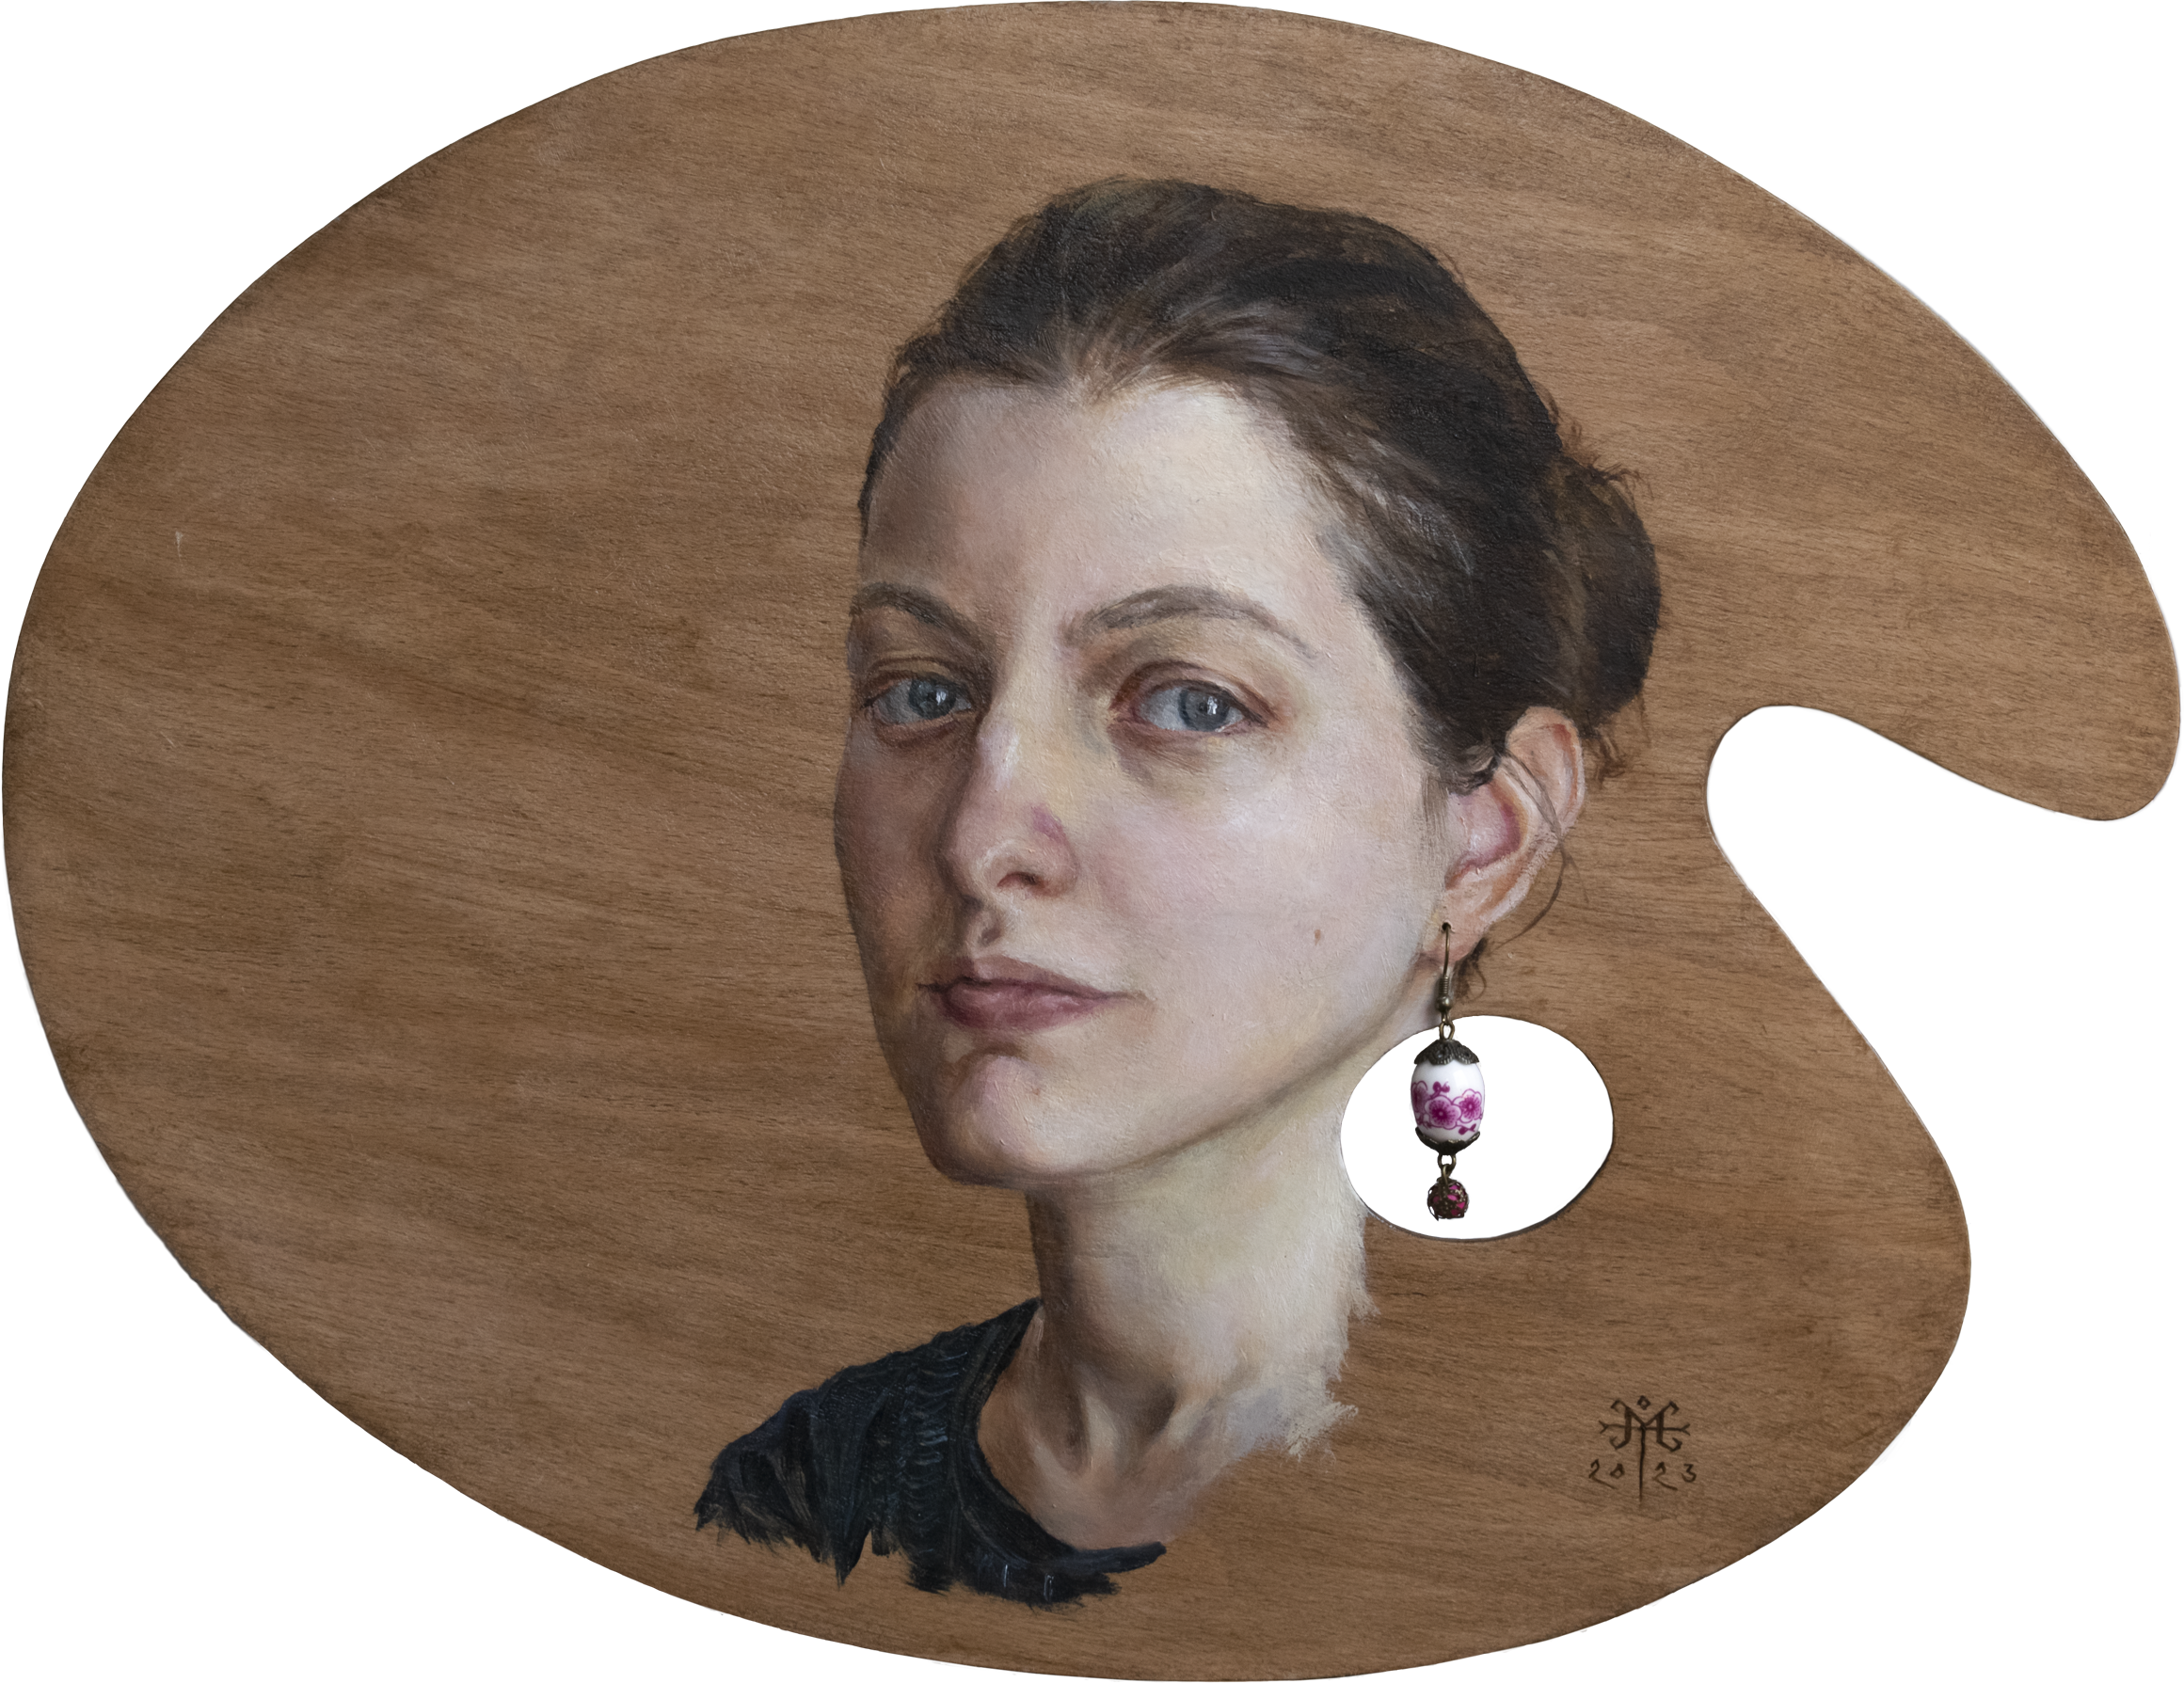 Self-portrait on the palette